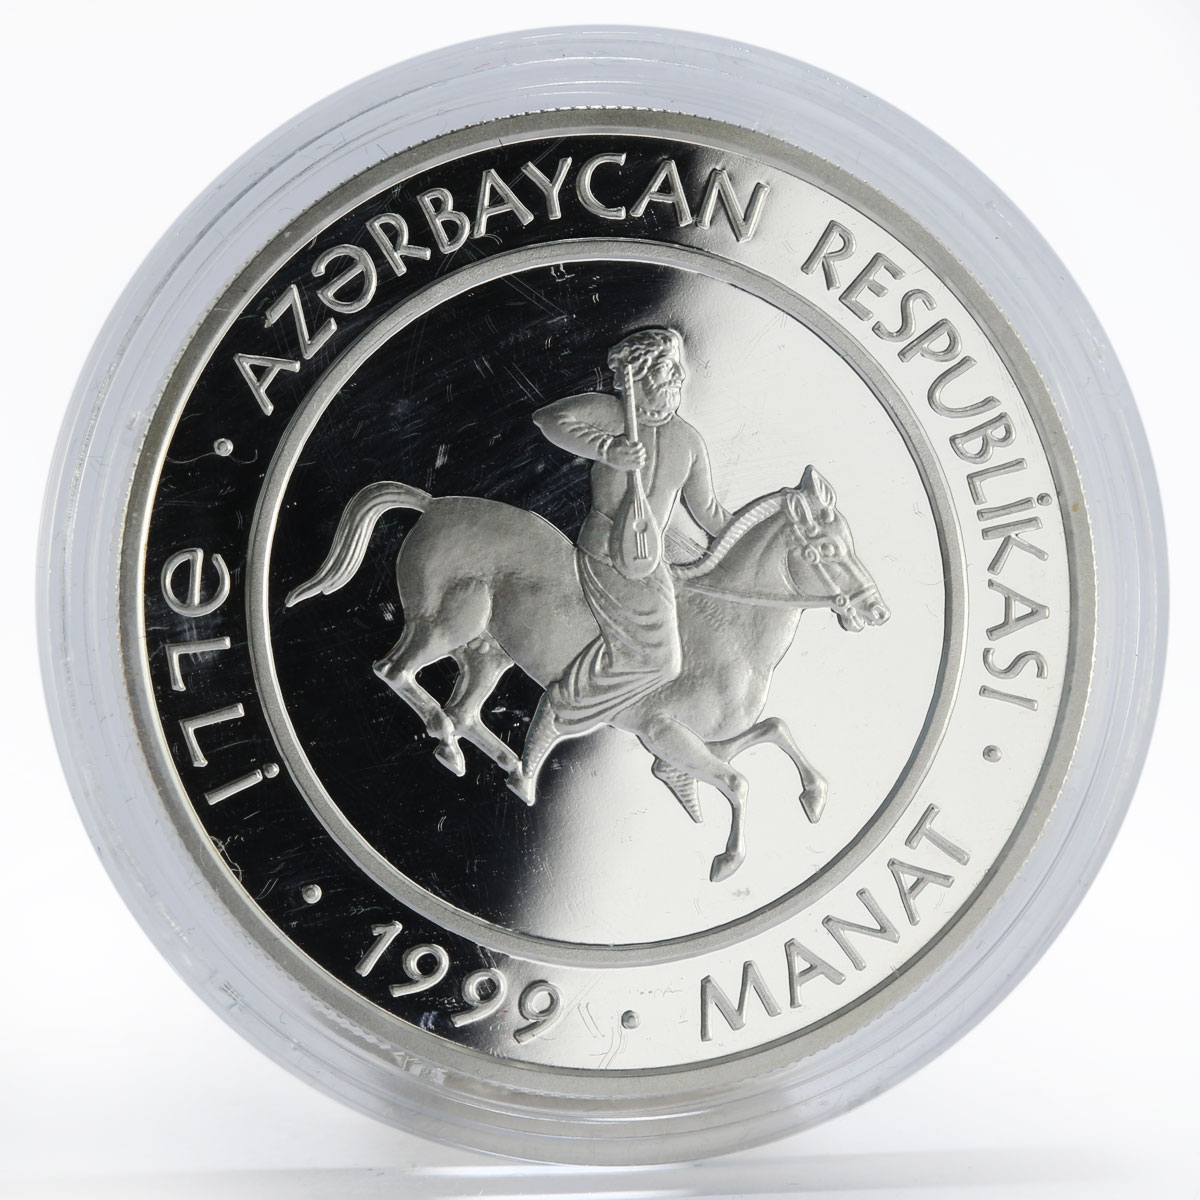 Azerbaijan 50 manat Book of my grandfather Corkuta 1300 silver proof coin 1999